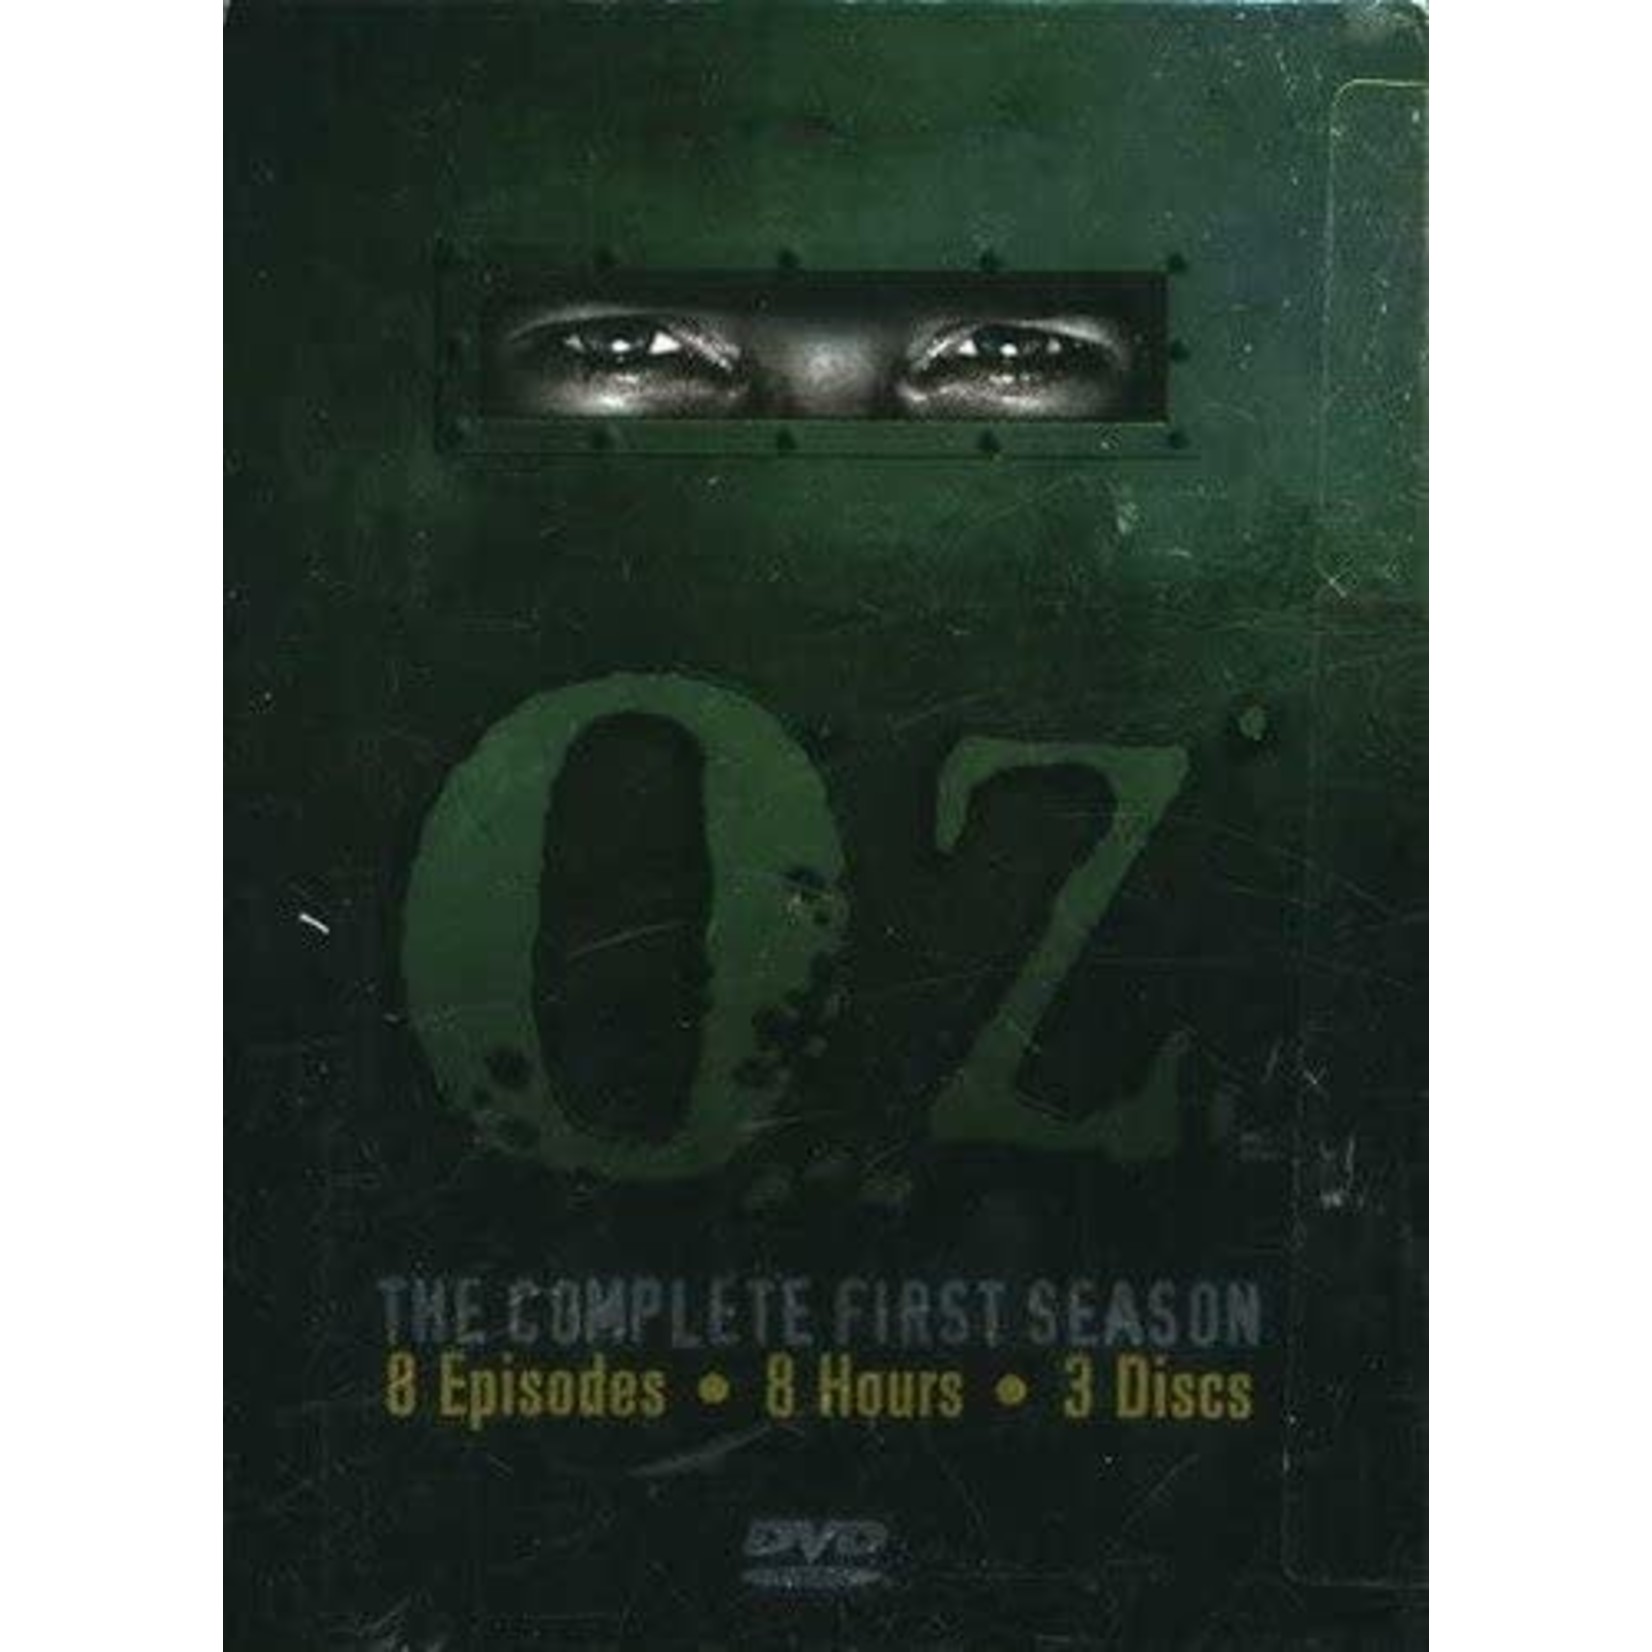 Oz - Season 1 [USED DVD]